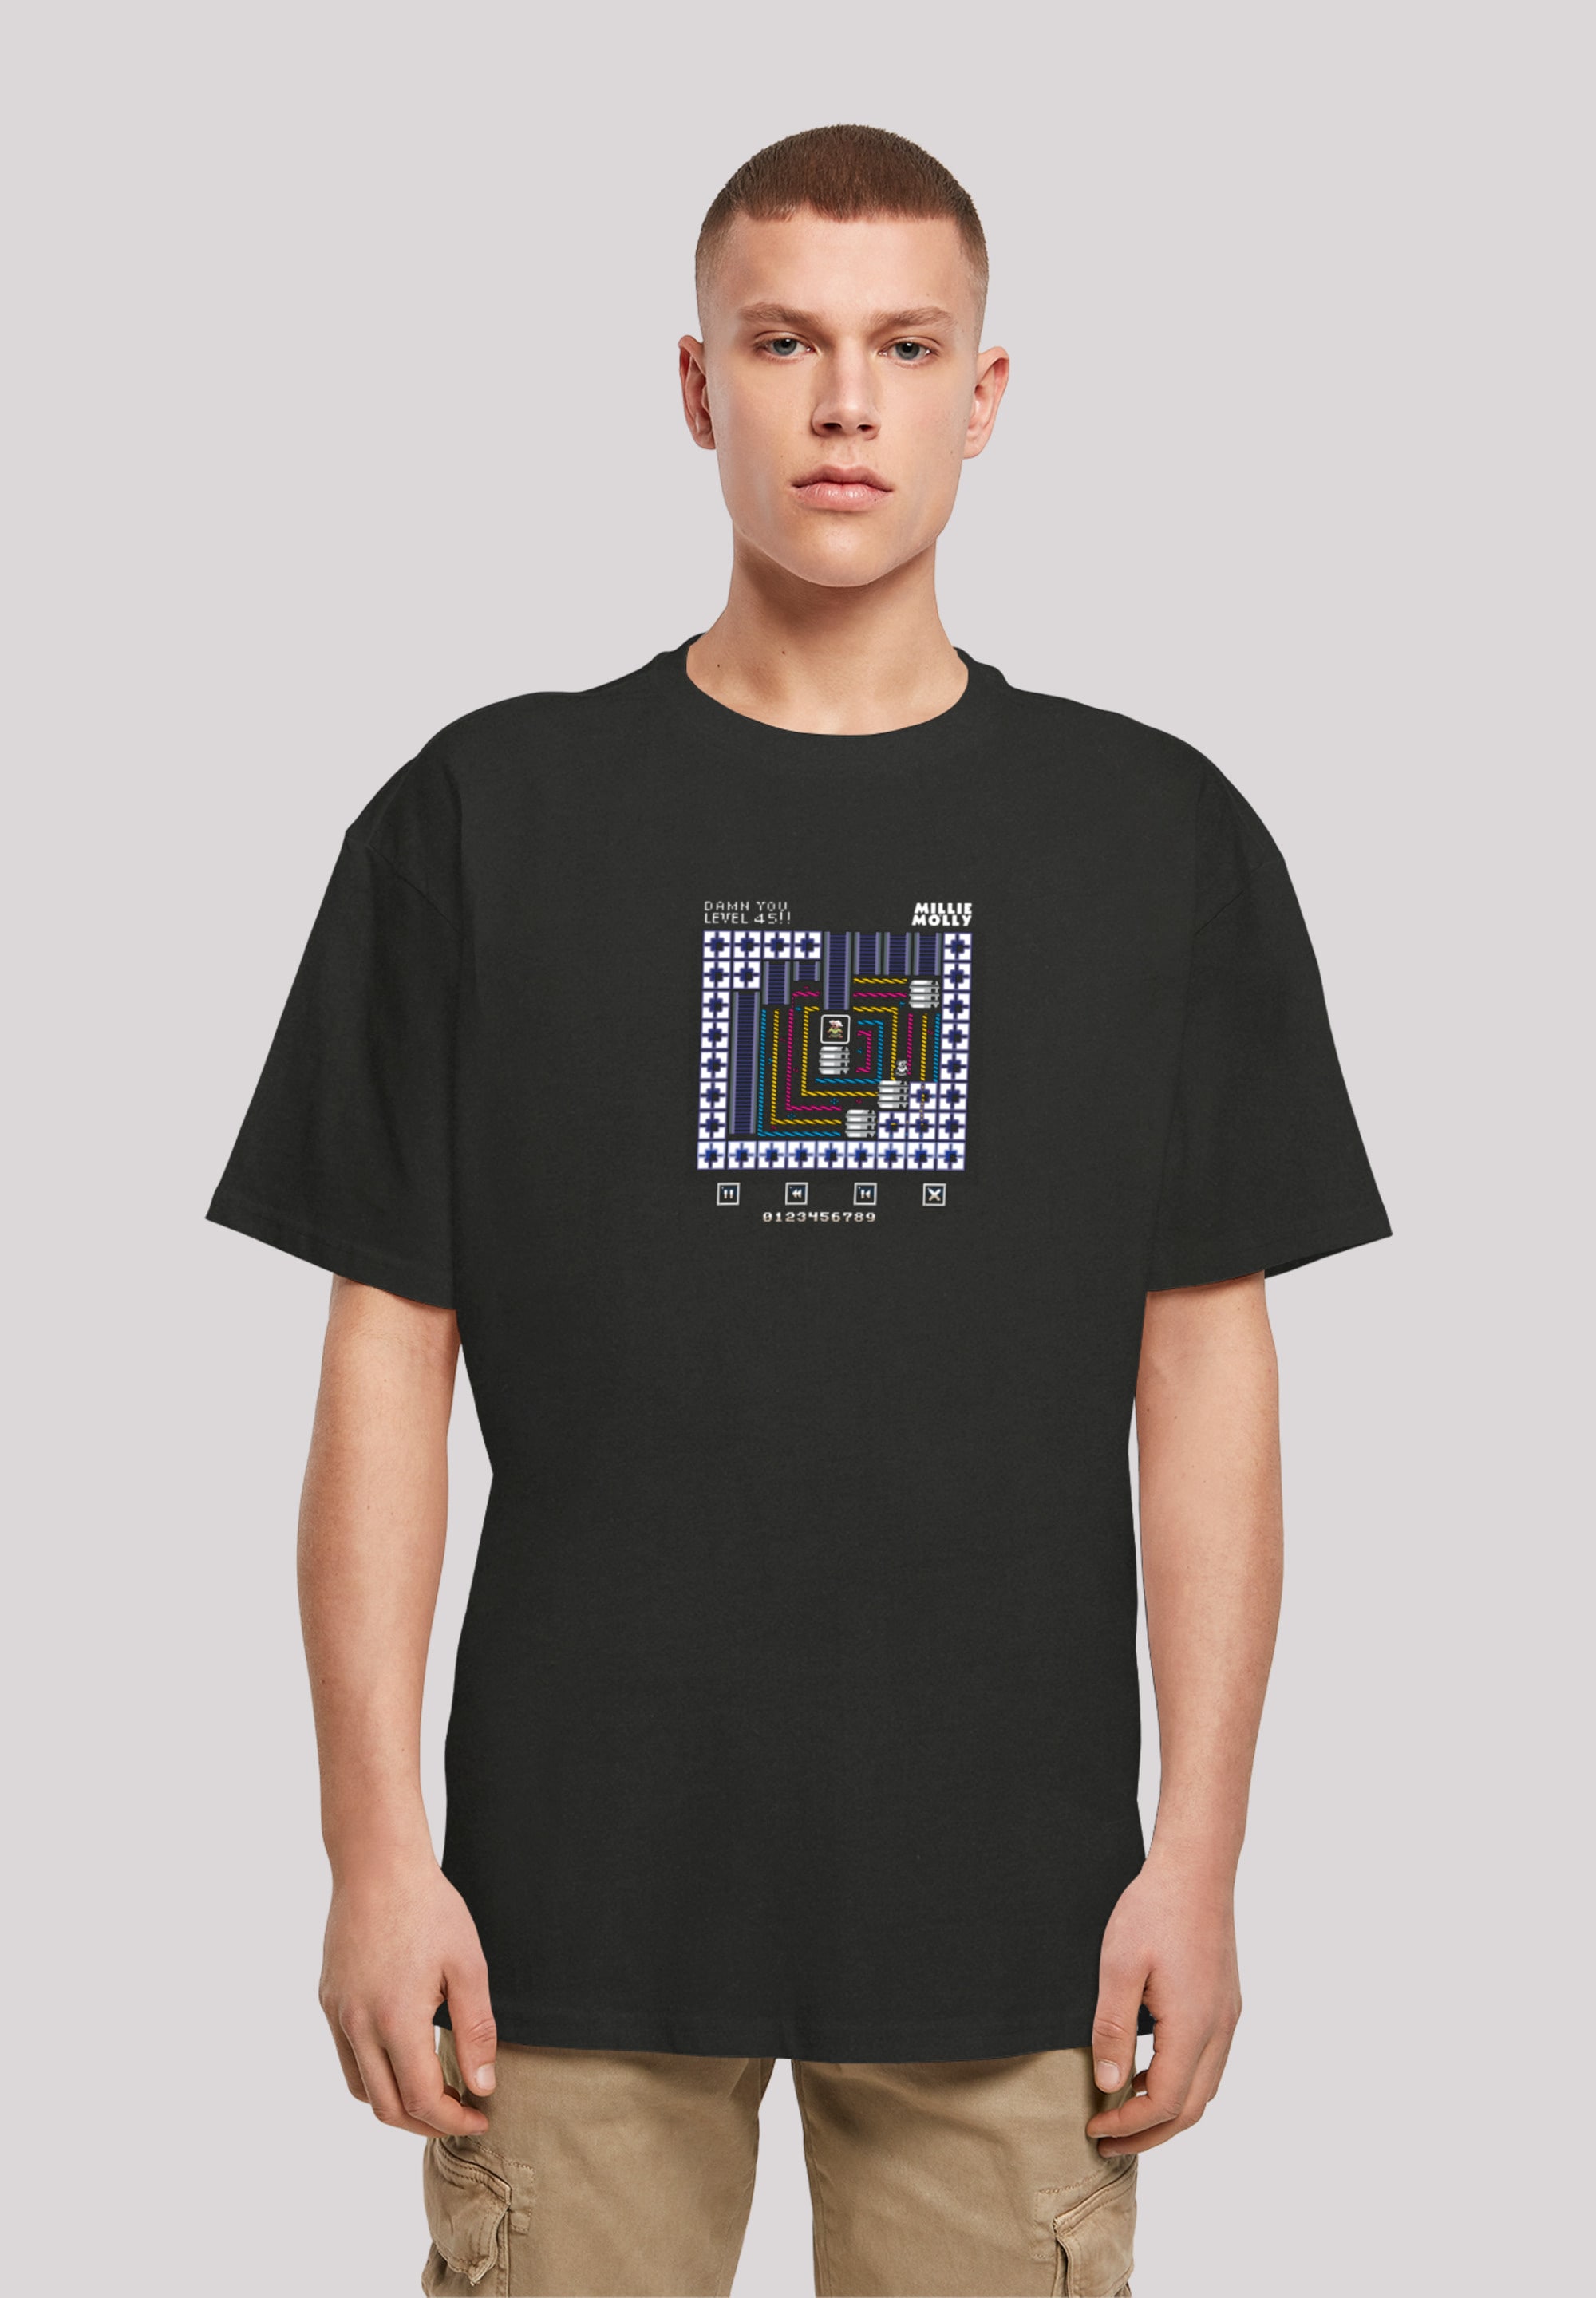 T-Shirt »Level 45 Millie Mollie C64 Retro Gaming«, Print